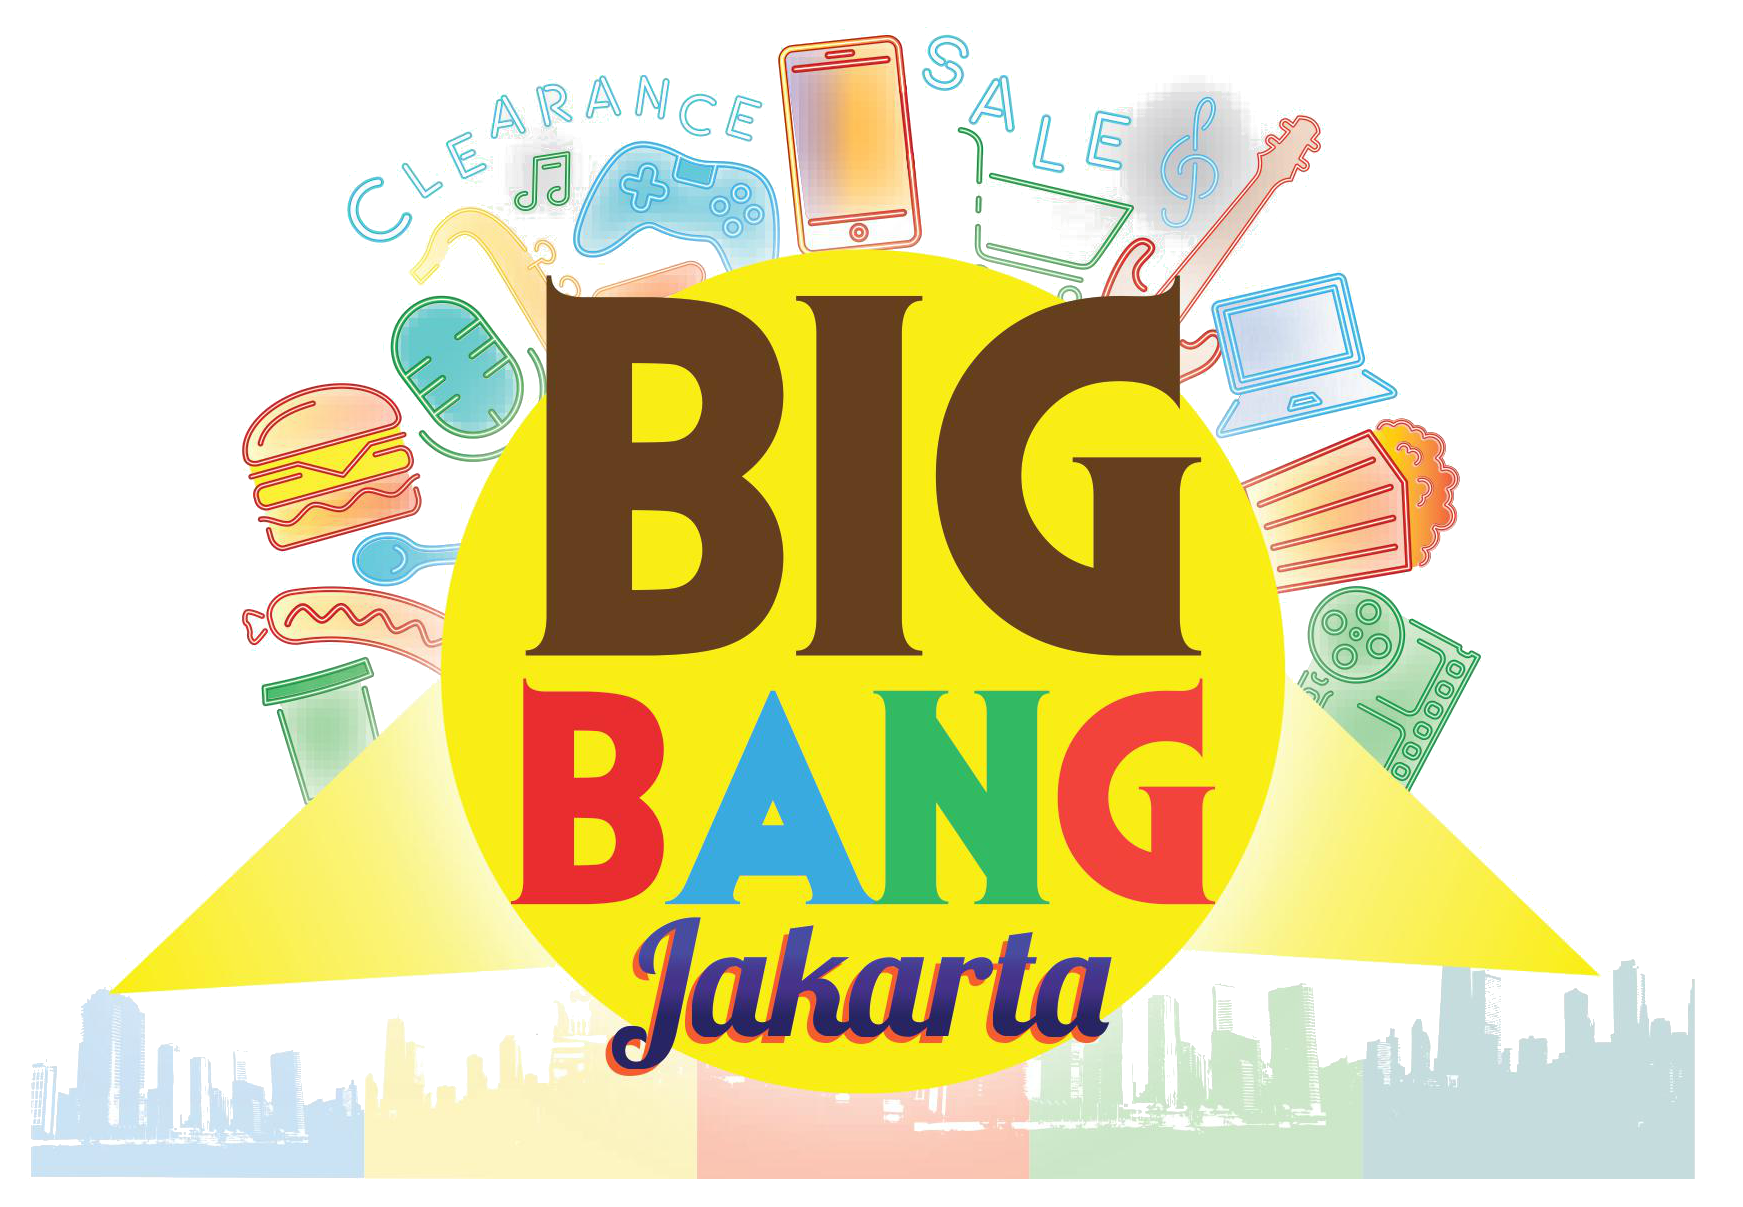 Big Bang Jakarta 2017